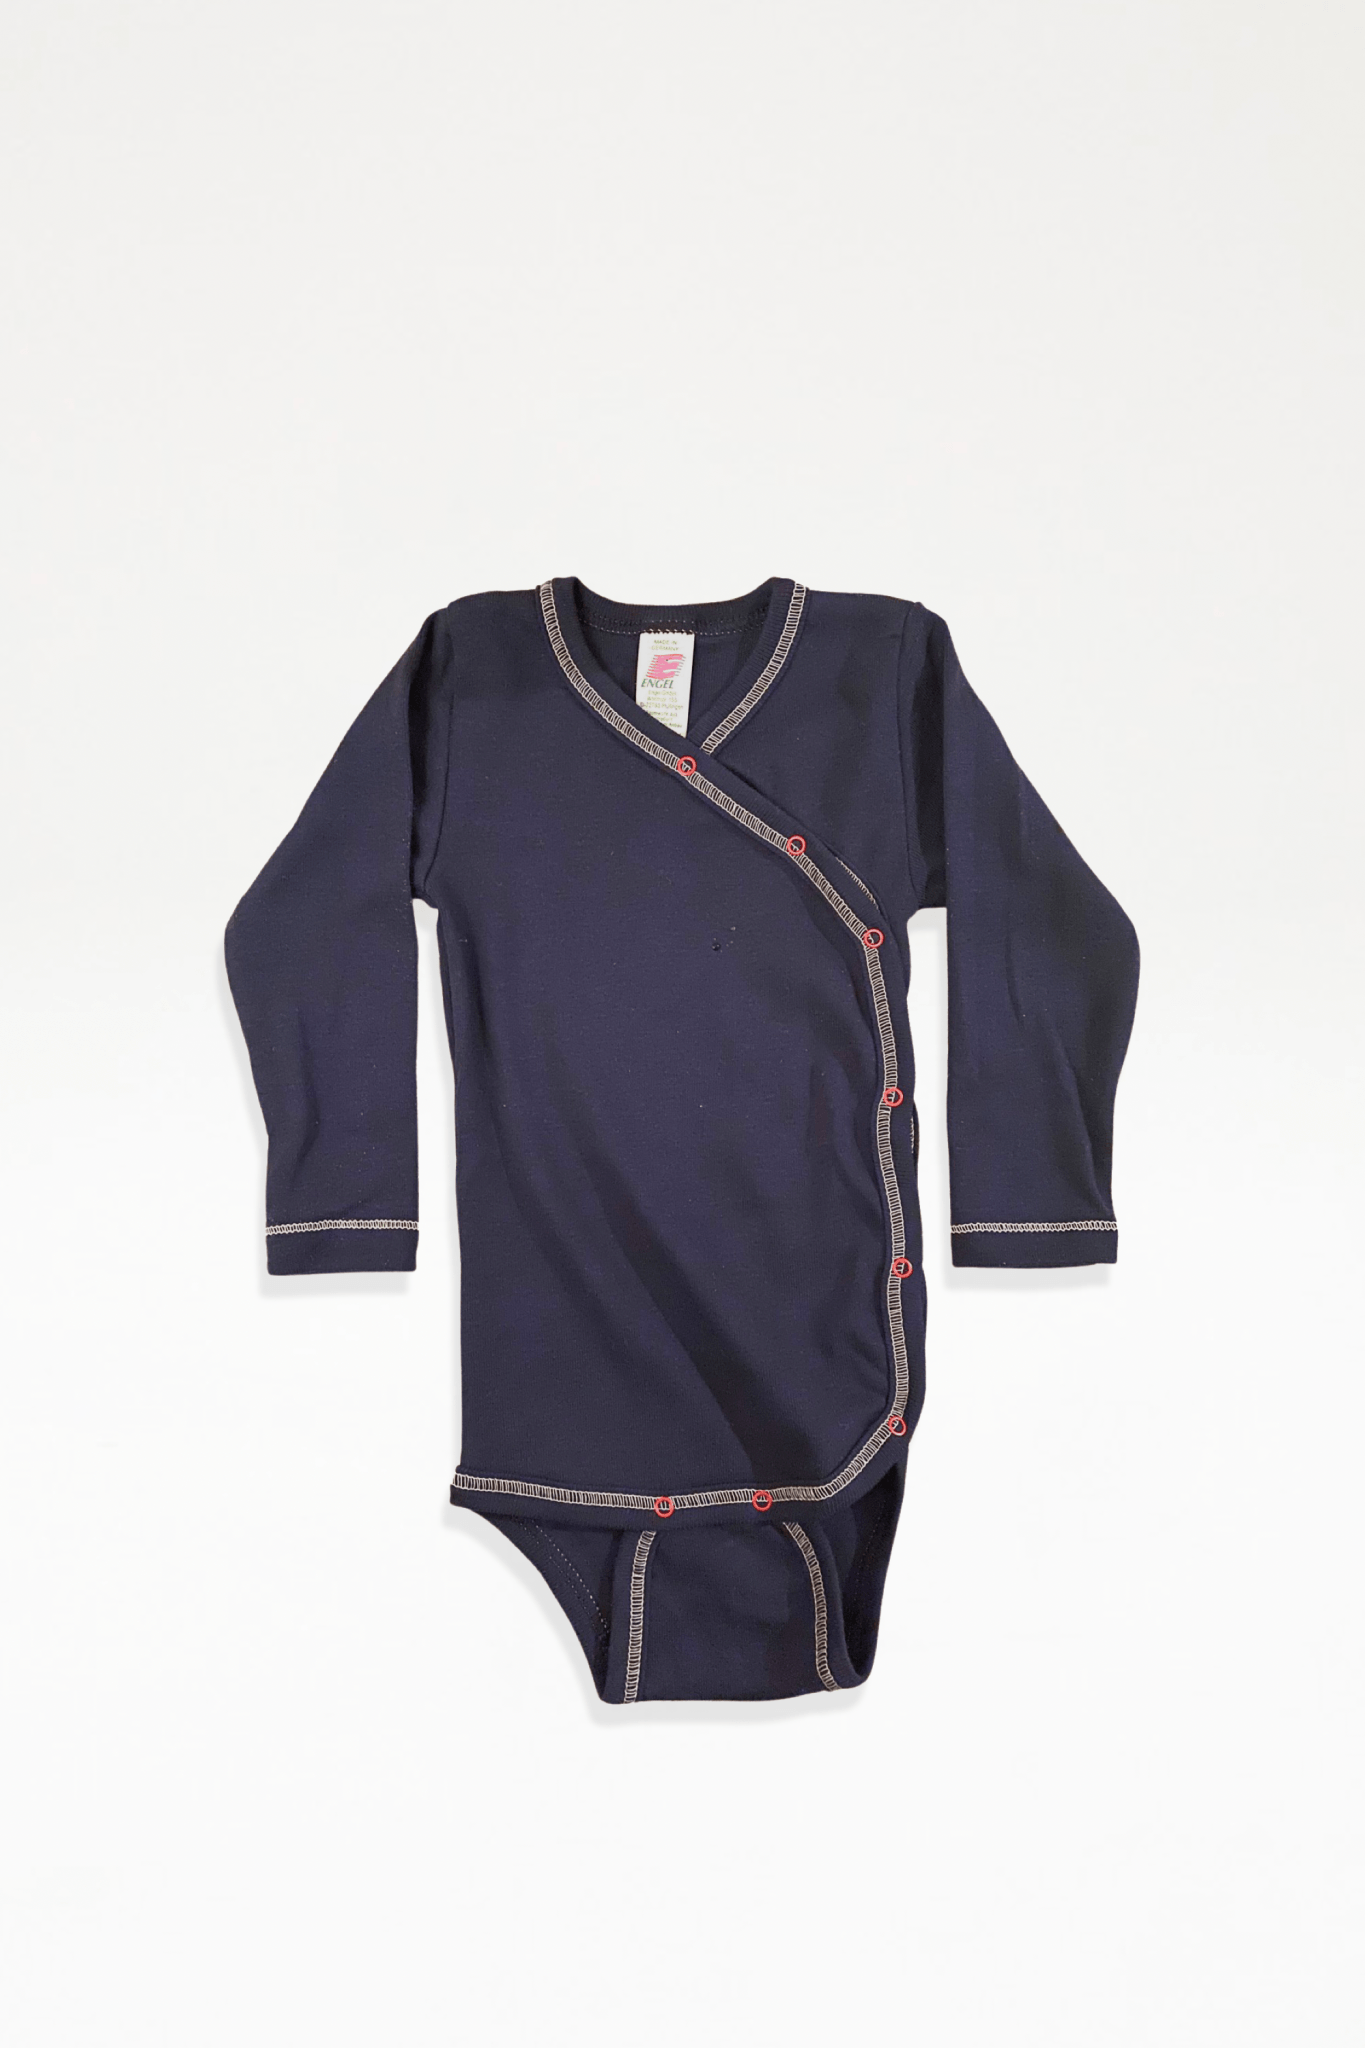 Engel - Baby Organic Cotton Long Sleeved Wrap Bodysuit - Navy - Ensemble Studios